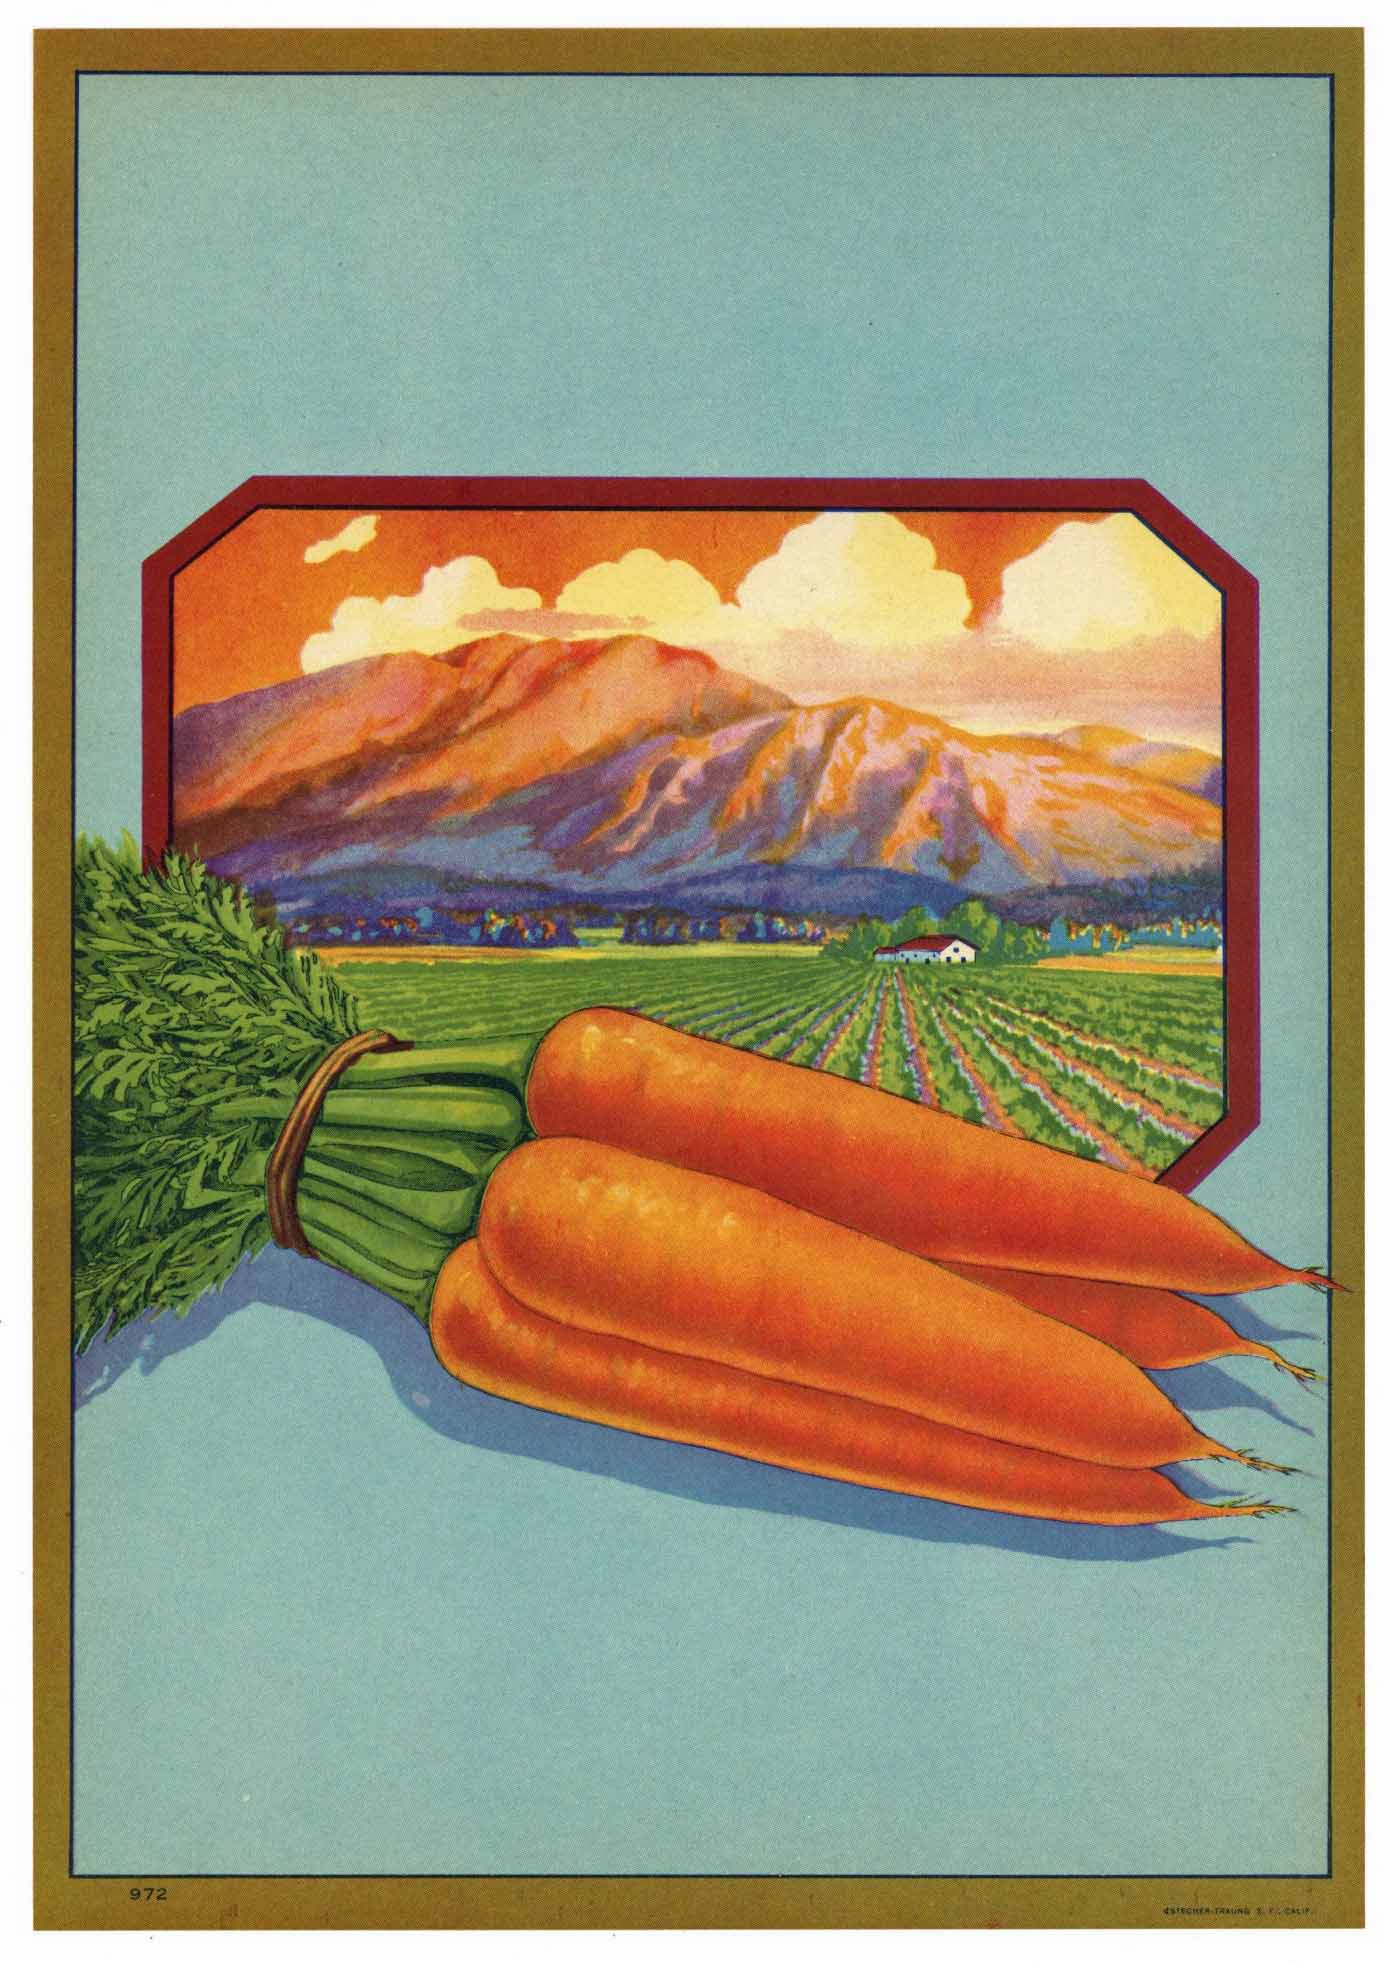 Stock #972 Vintage Vegetable Crate Label, carrots